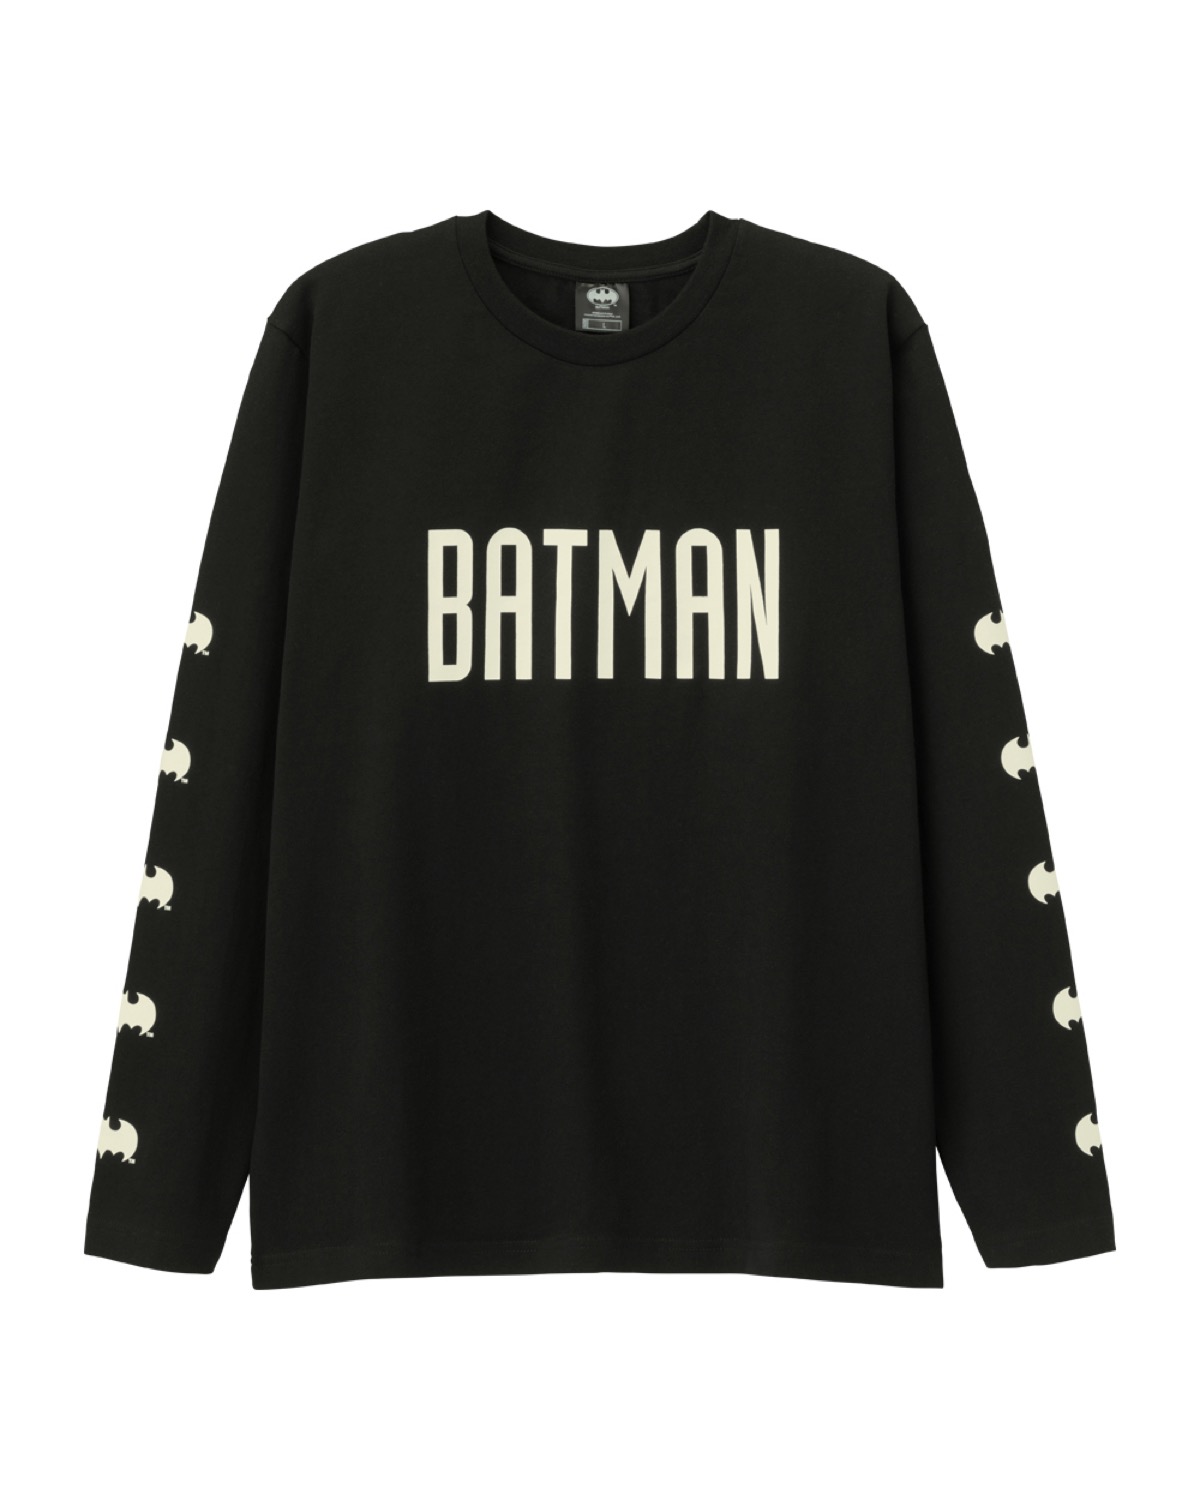 Gu ジーユー から バットマン との特別なコレクションが登場 ファッション Fineboys Online